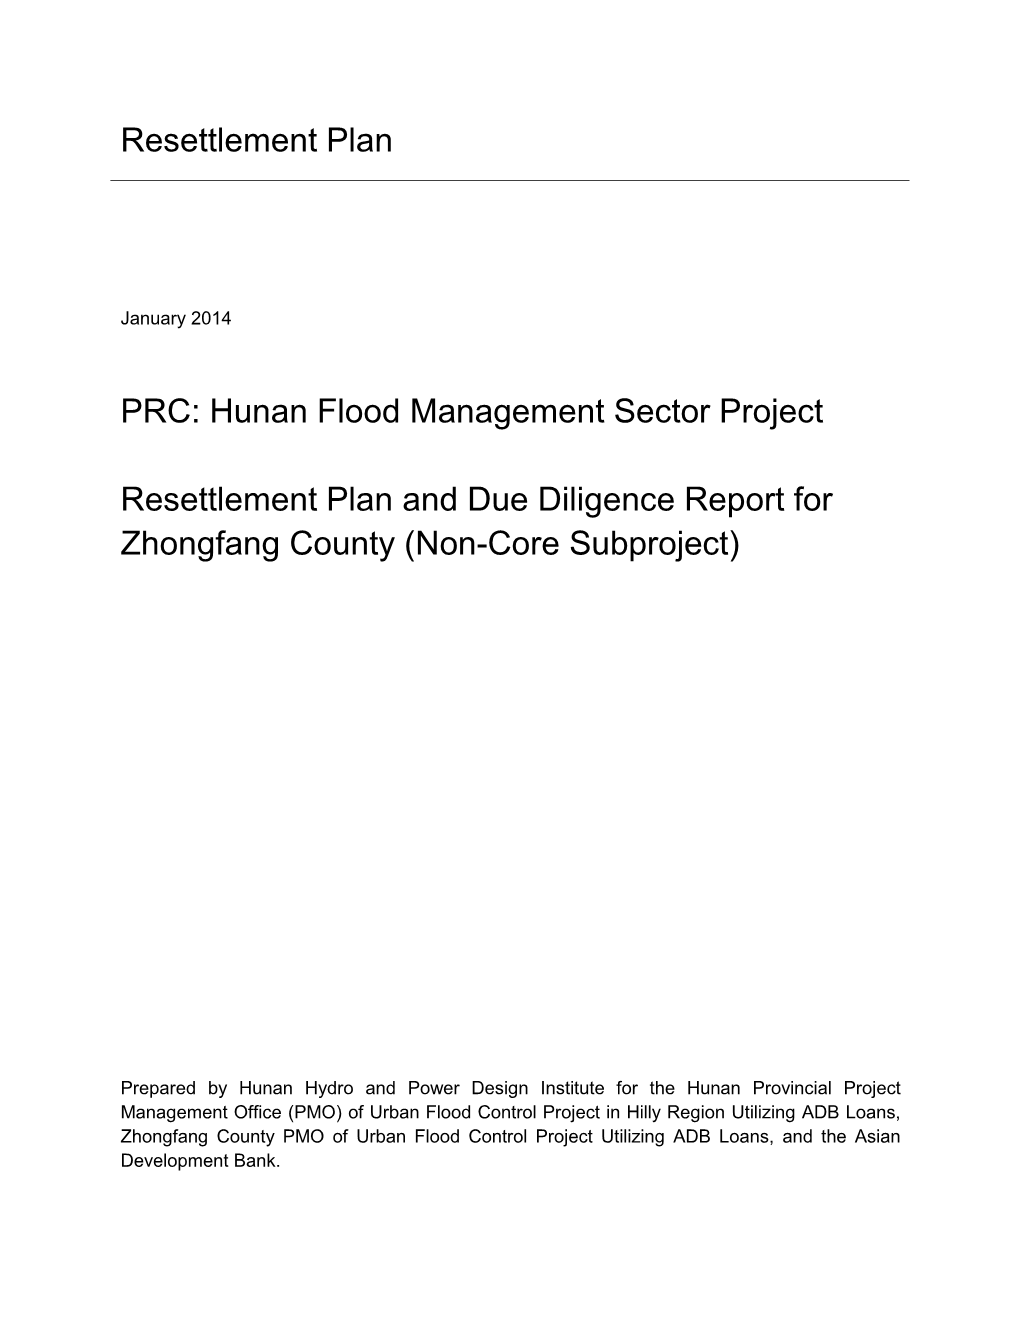 Hunan Flood Management Sector Project: Zhongfang County